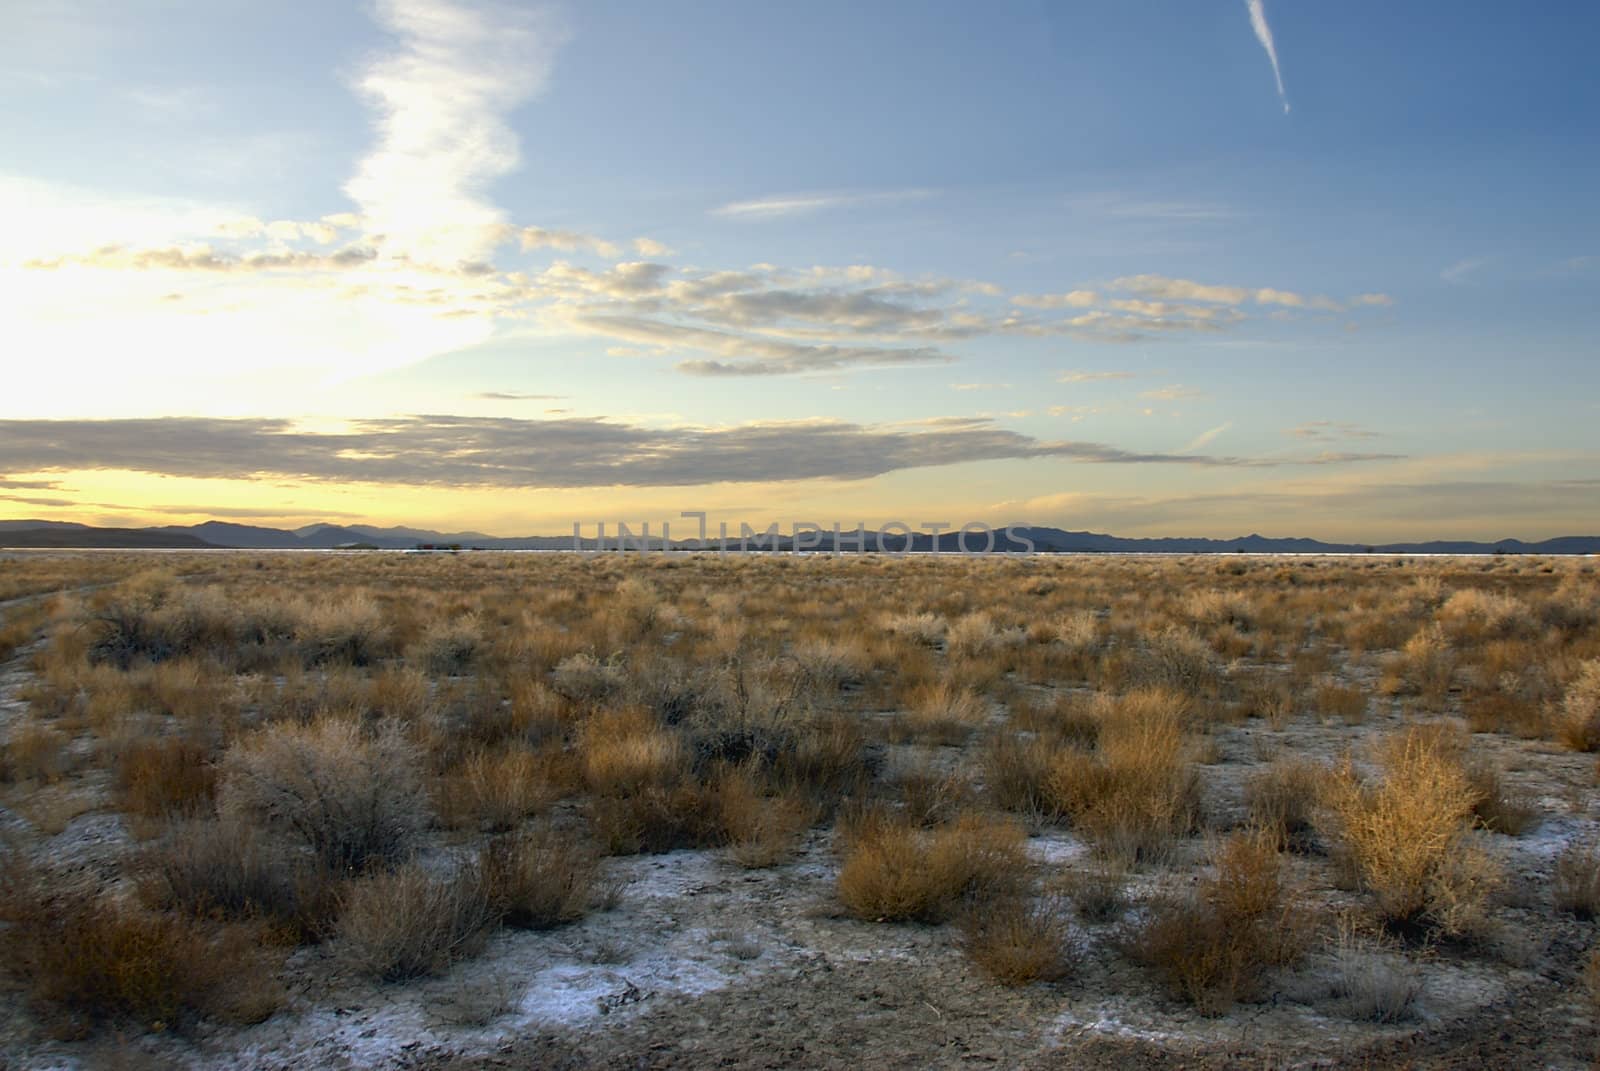 Desert vista by npologuy